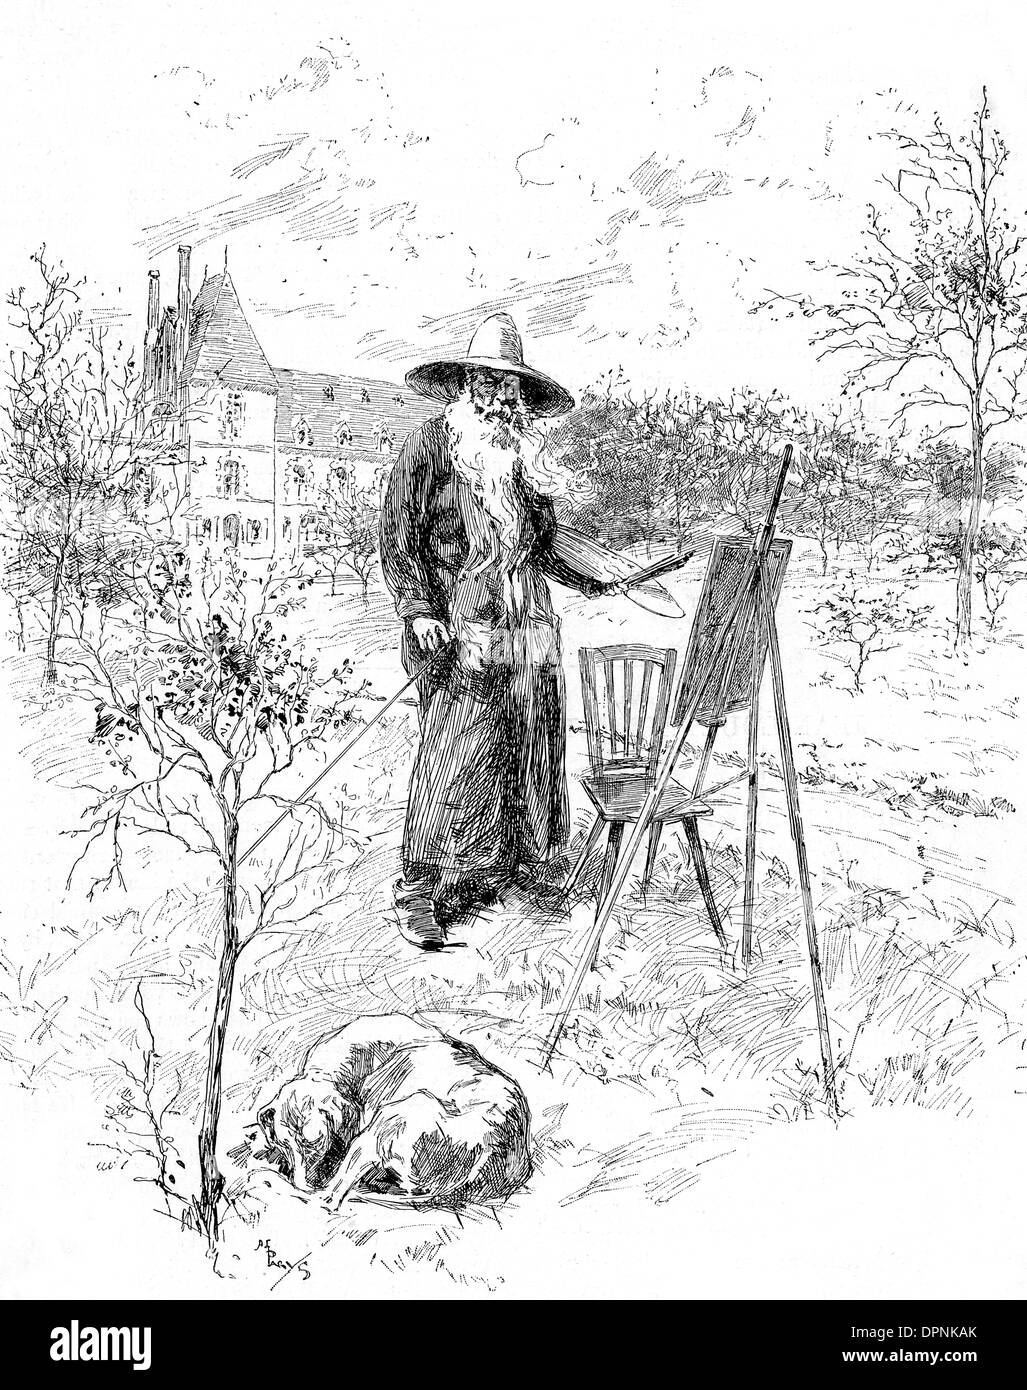 Ernest Meissonier, artista francés, pintura al aire libre Foto de stock